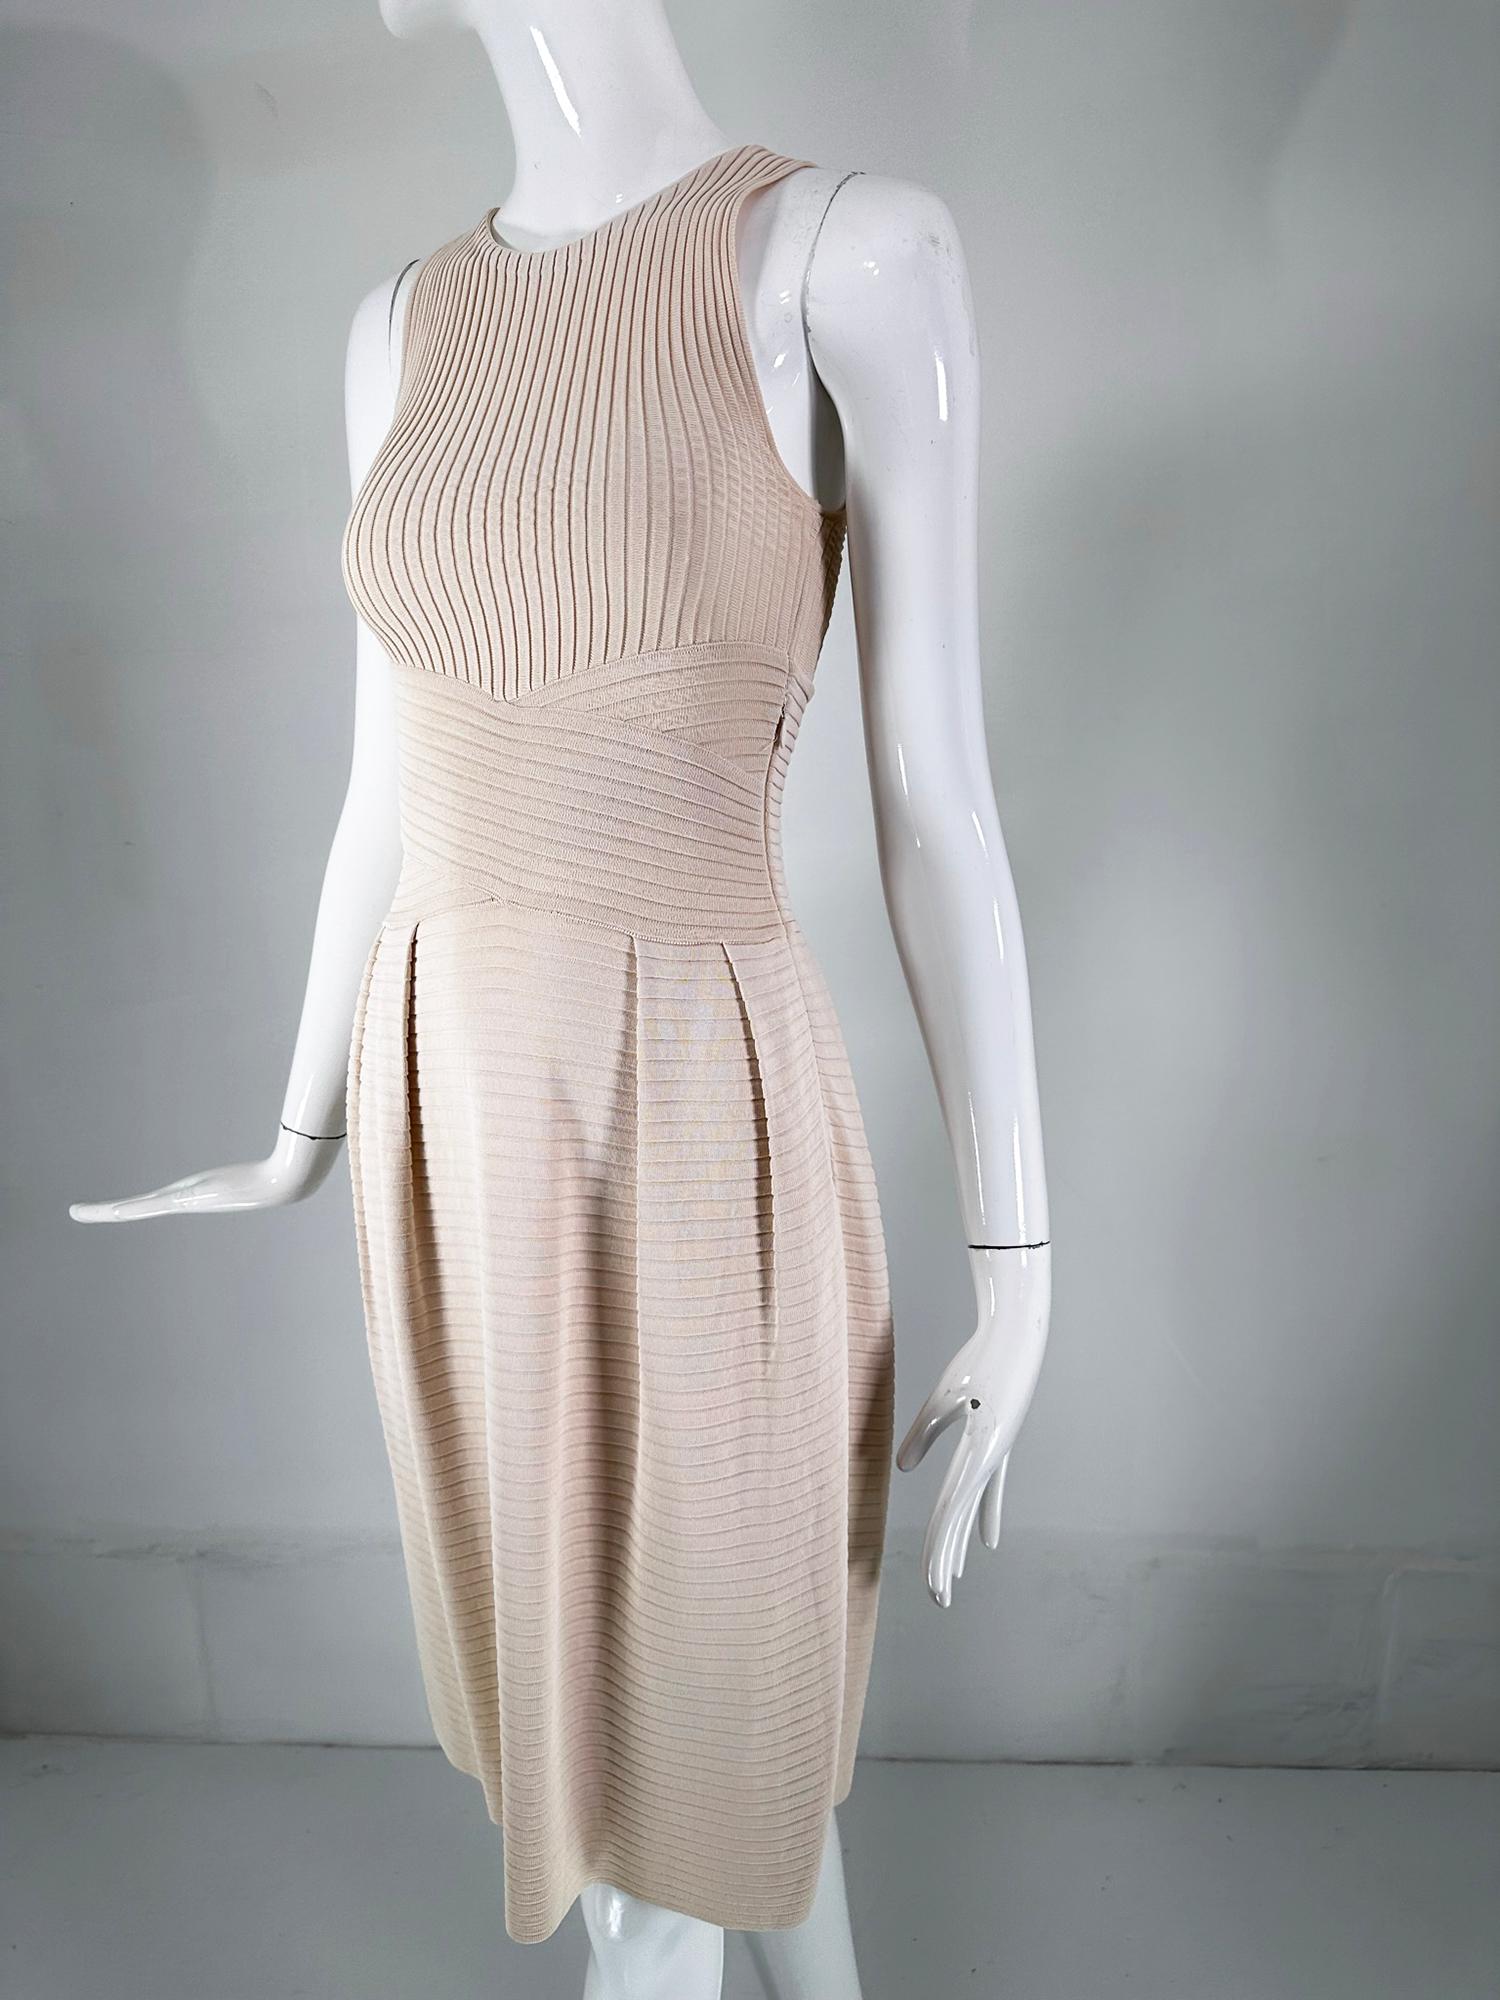 Christian Dior Paris Ribbed Knit Beige Tank Dress 2010 For Sale 10